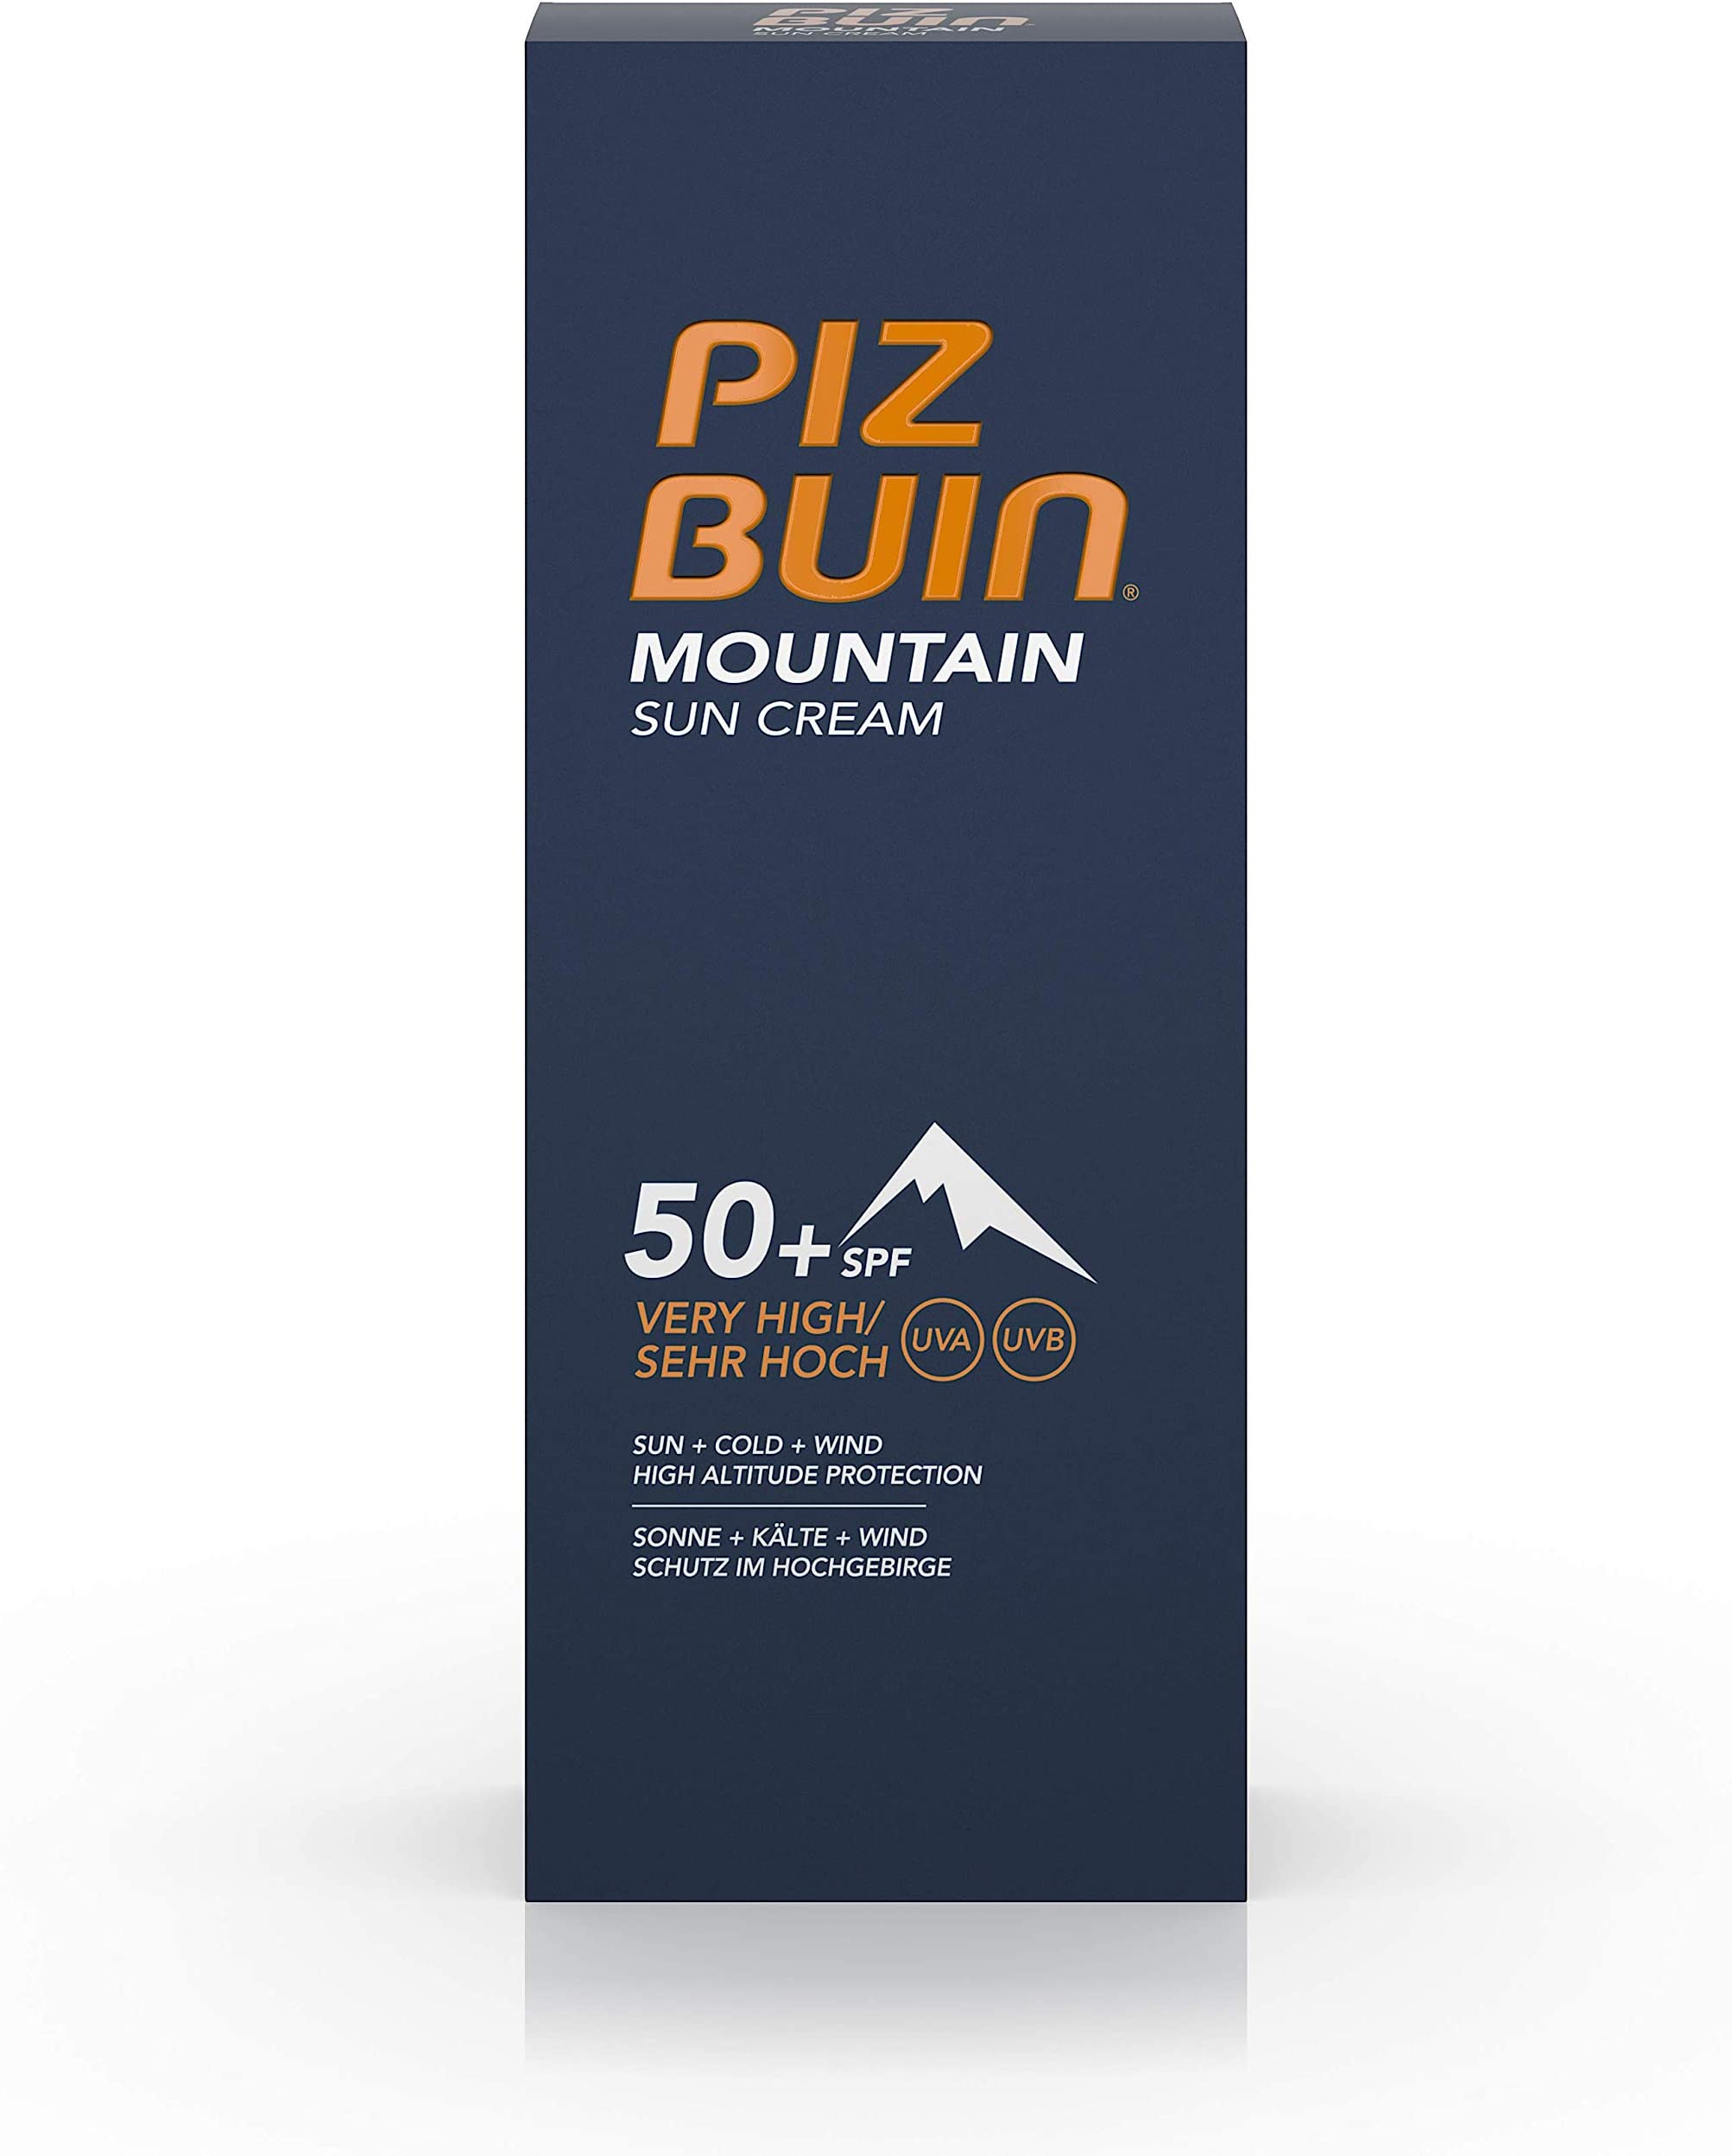 Image of Piz Buin Mountain Face Suncream SPF 50+, 50ml